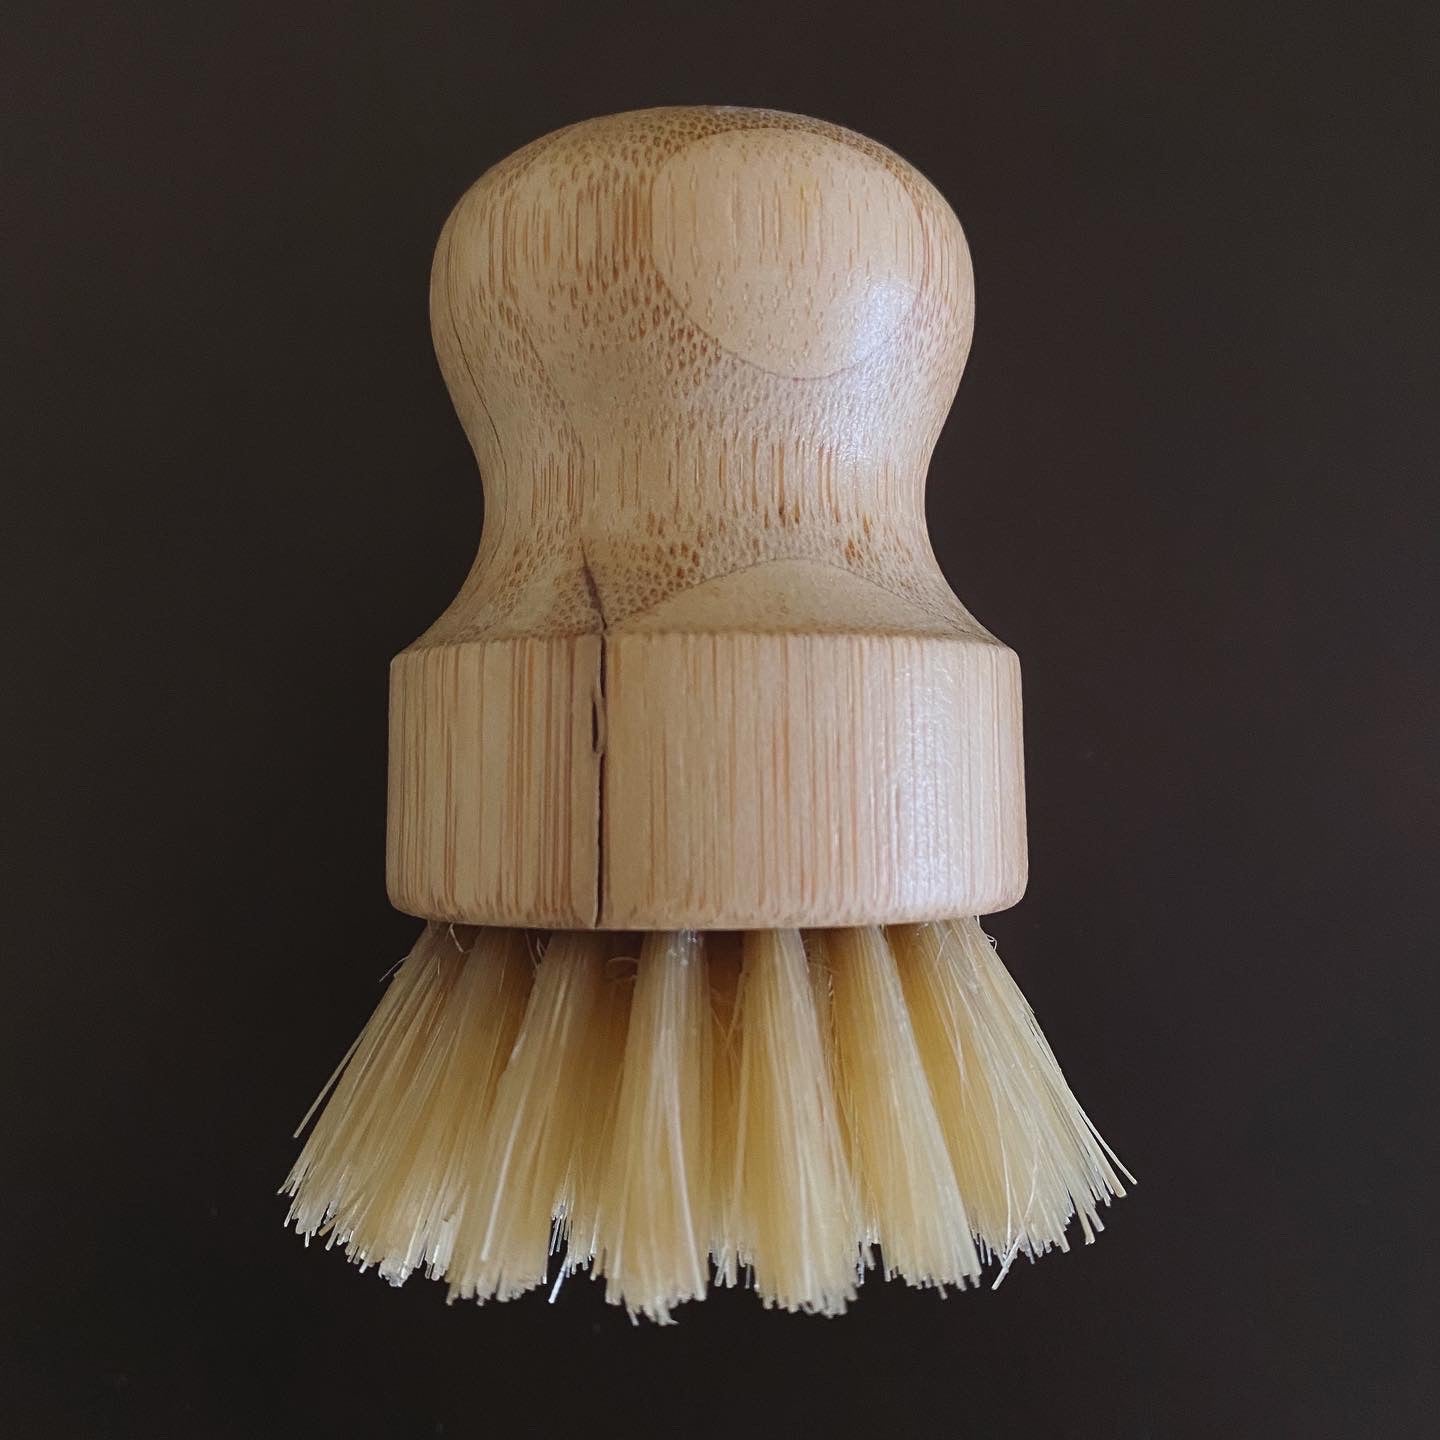 Short Handle Bamboo Dish Brush